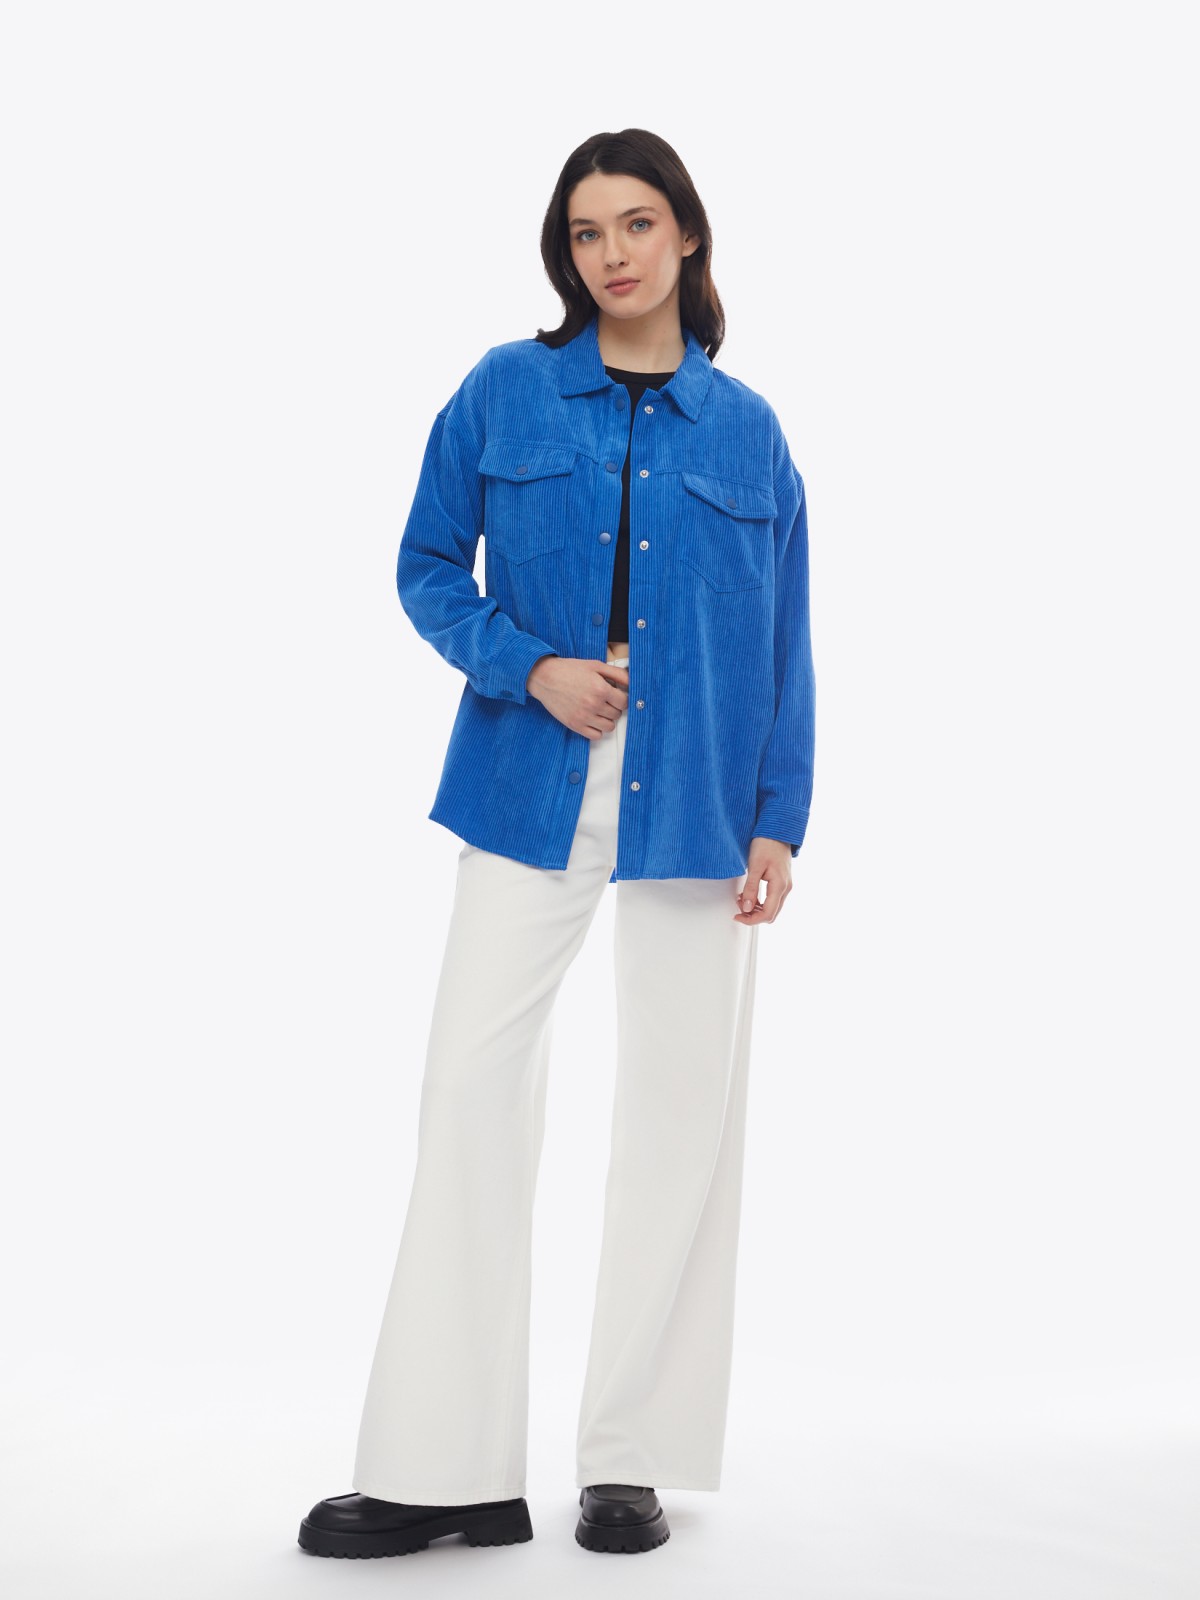 Куртка-рубашка объёмного силуэта из вельвета zolla 02412540L023, цвет голубой, размер XS - фото 2